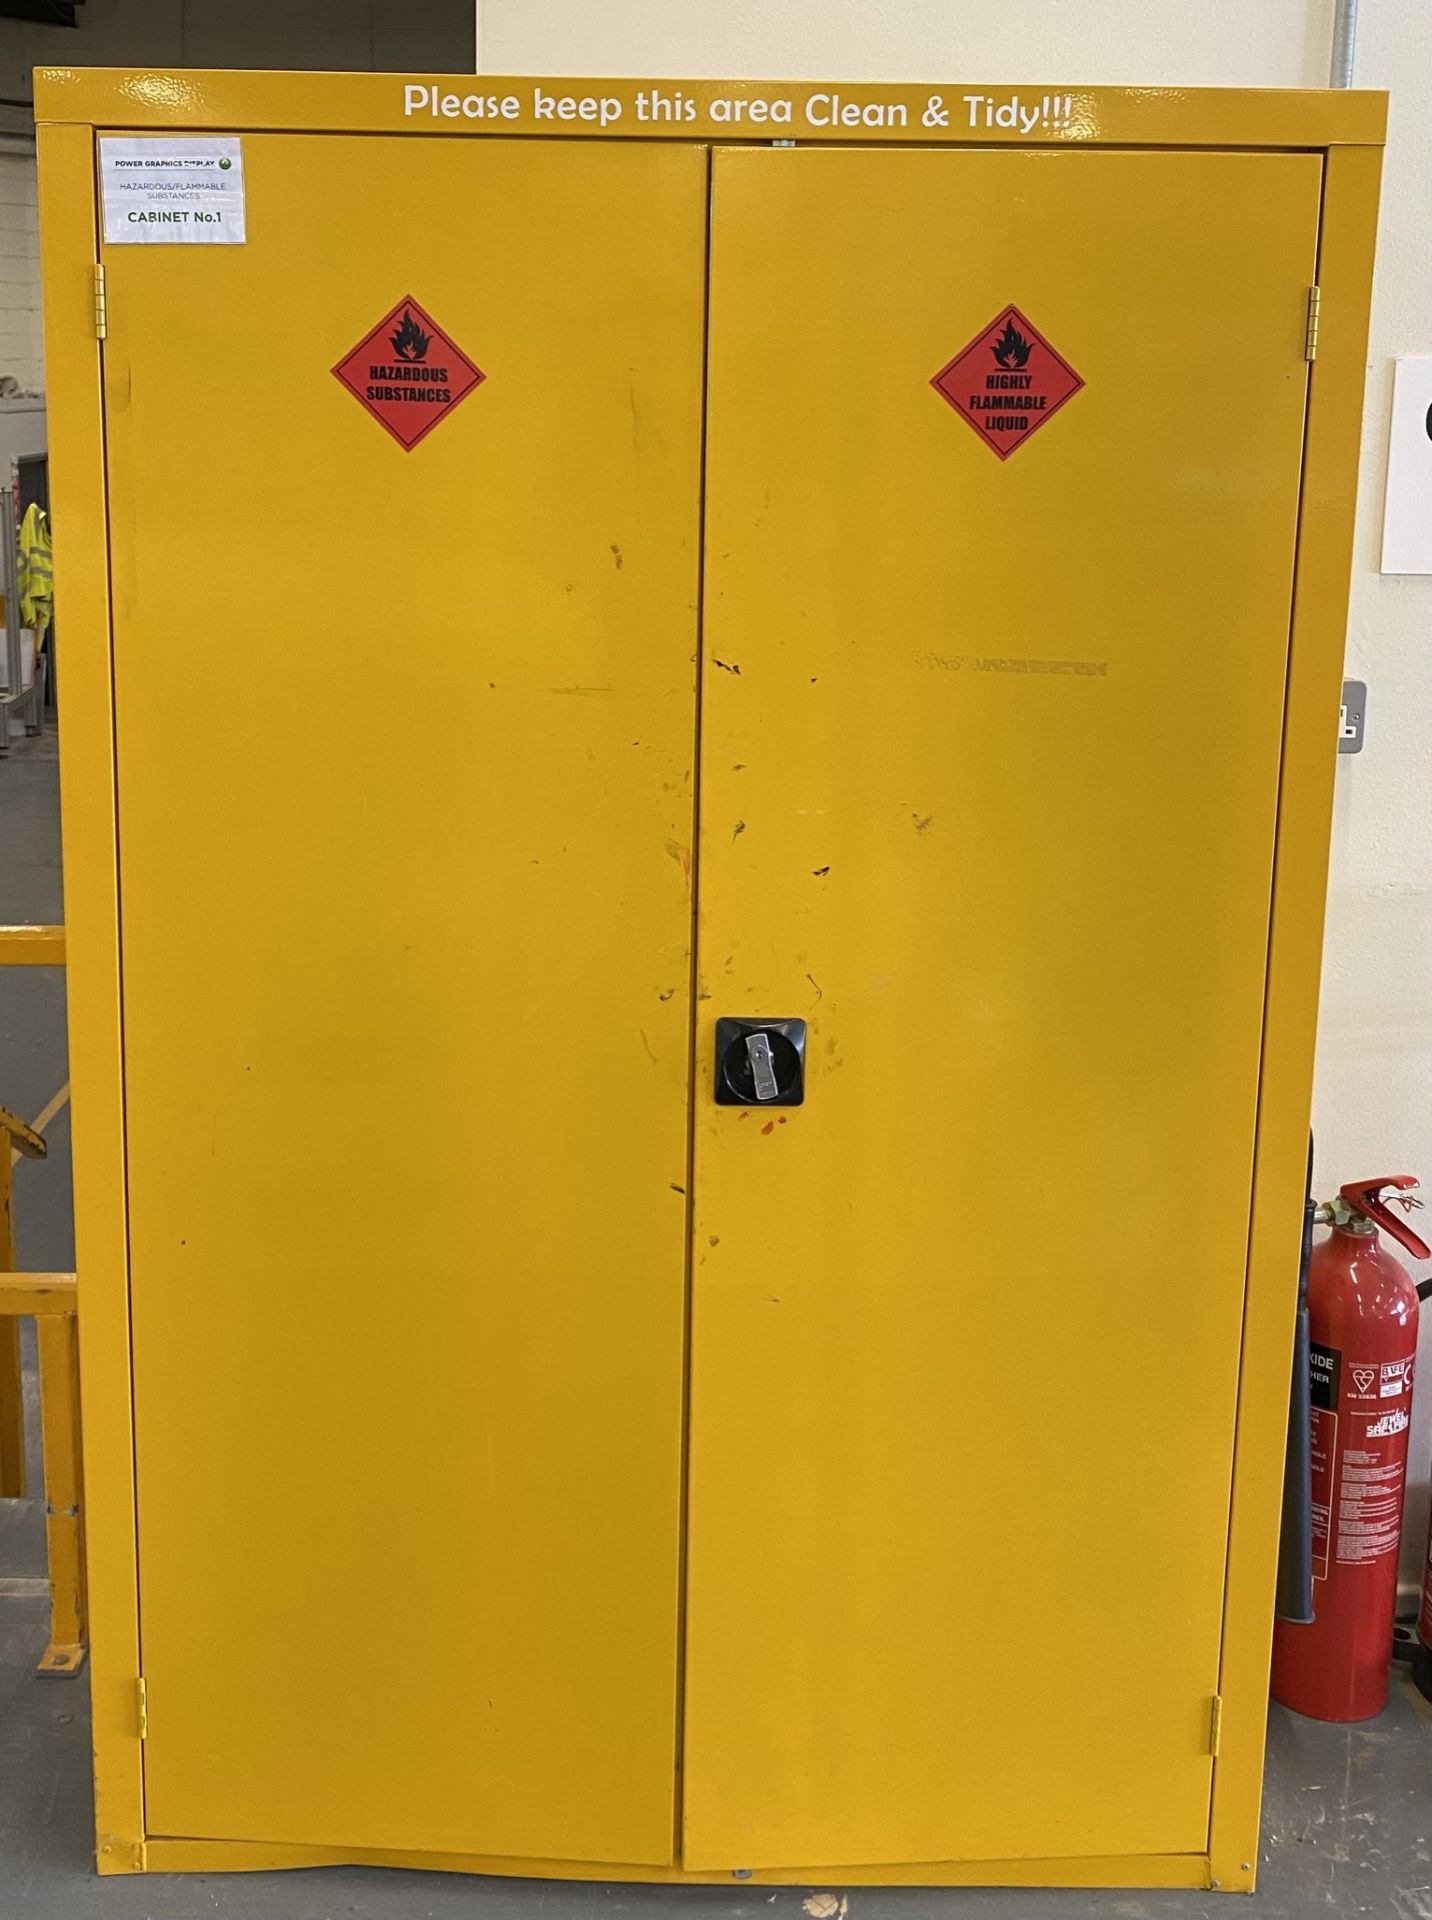 A 2 door yellow hazardous substances cab